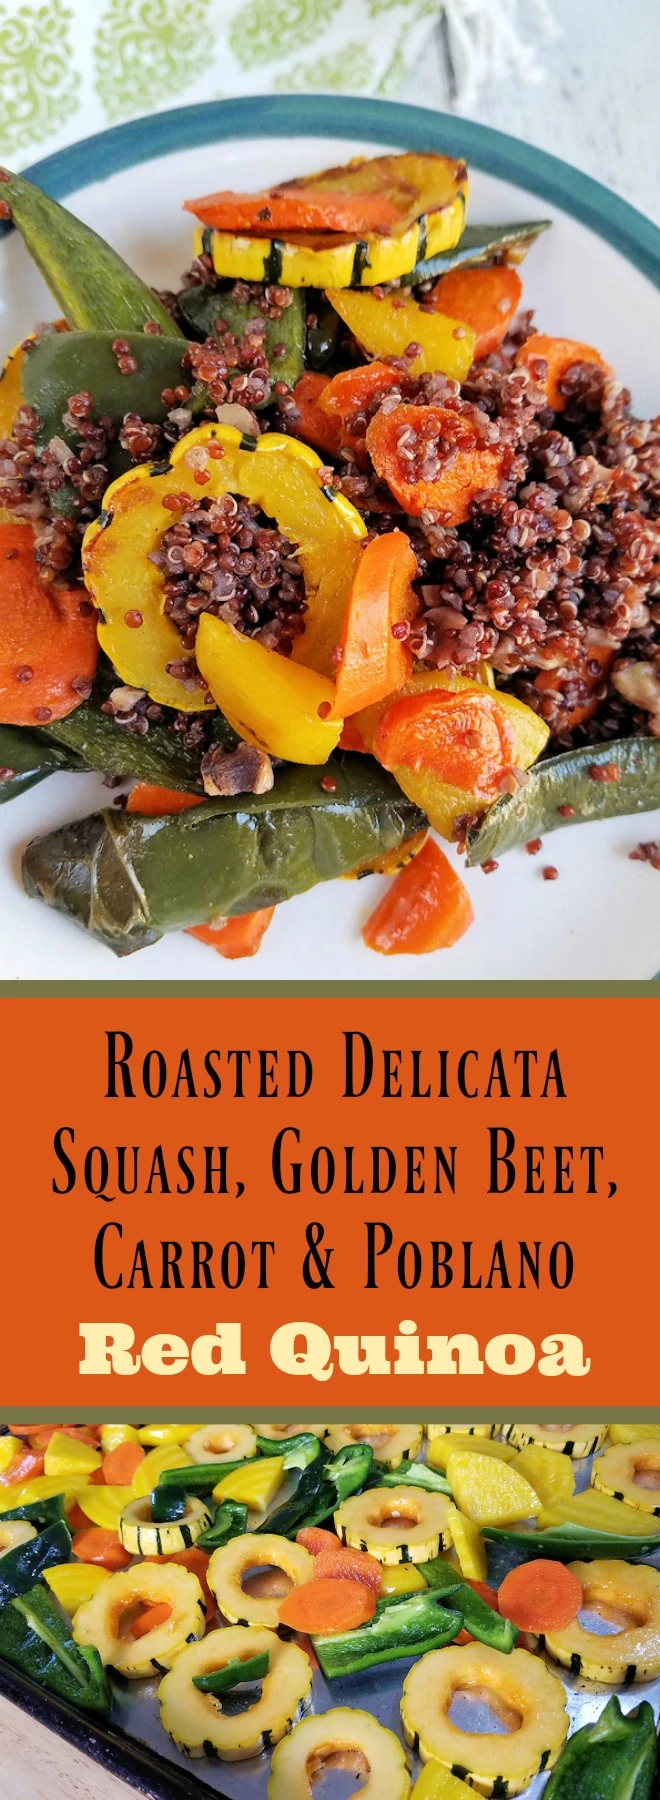 Roasted Delicata Squash, Golden Beet, Carrot & Poblano Red Quinoa Recipe